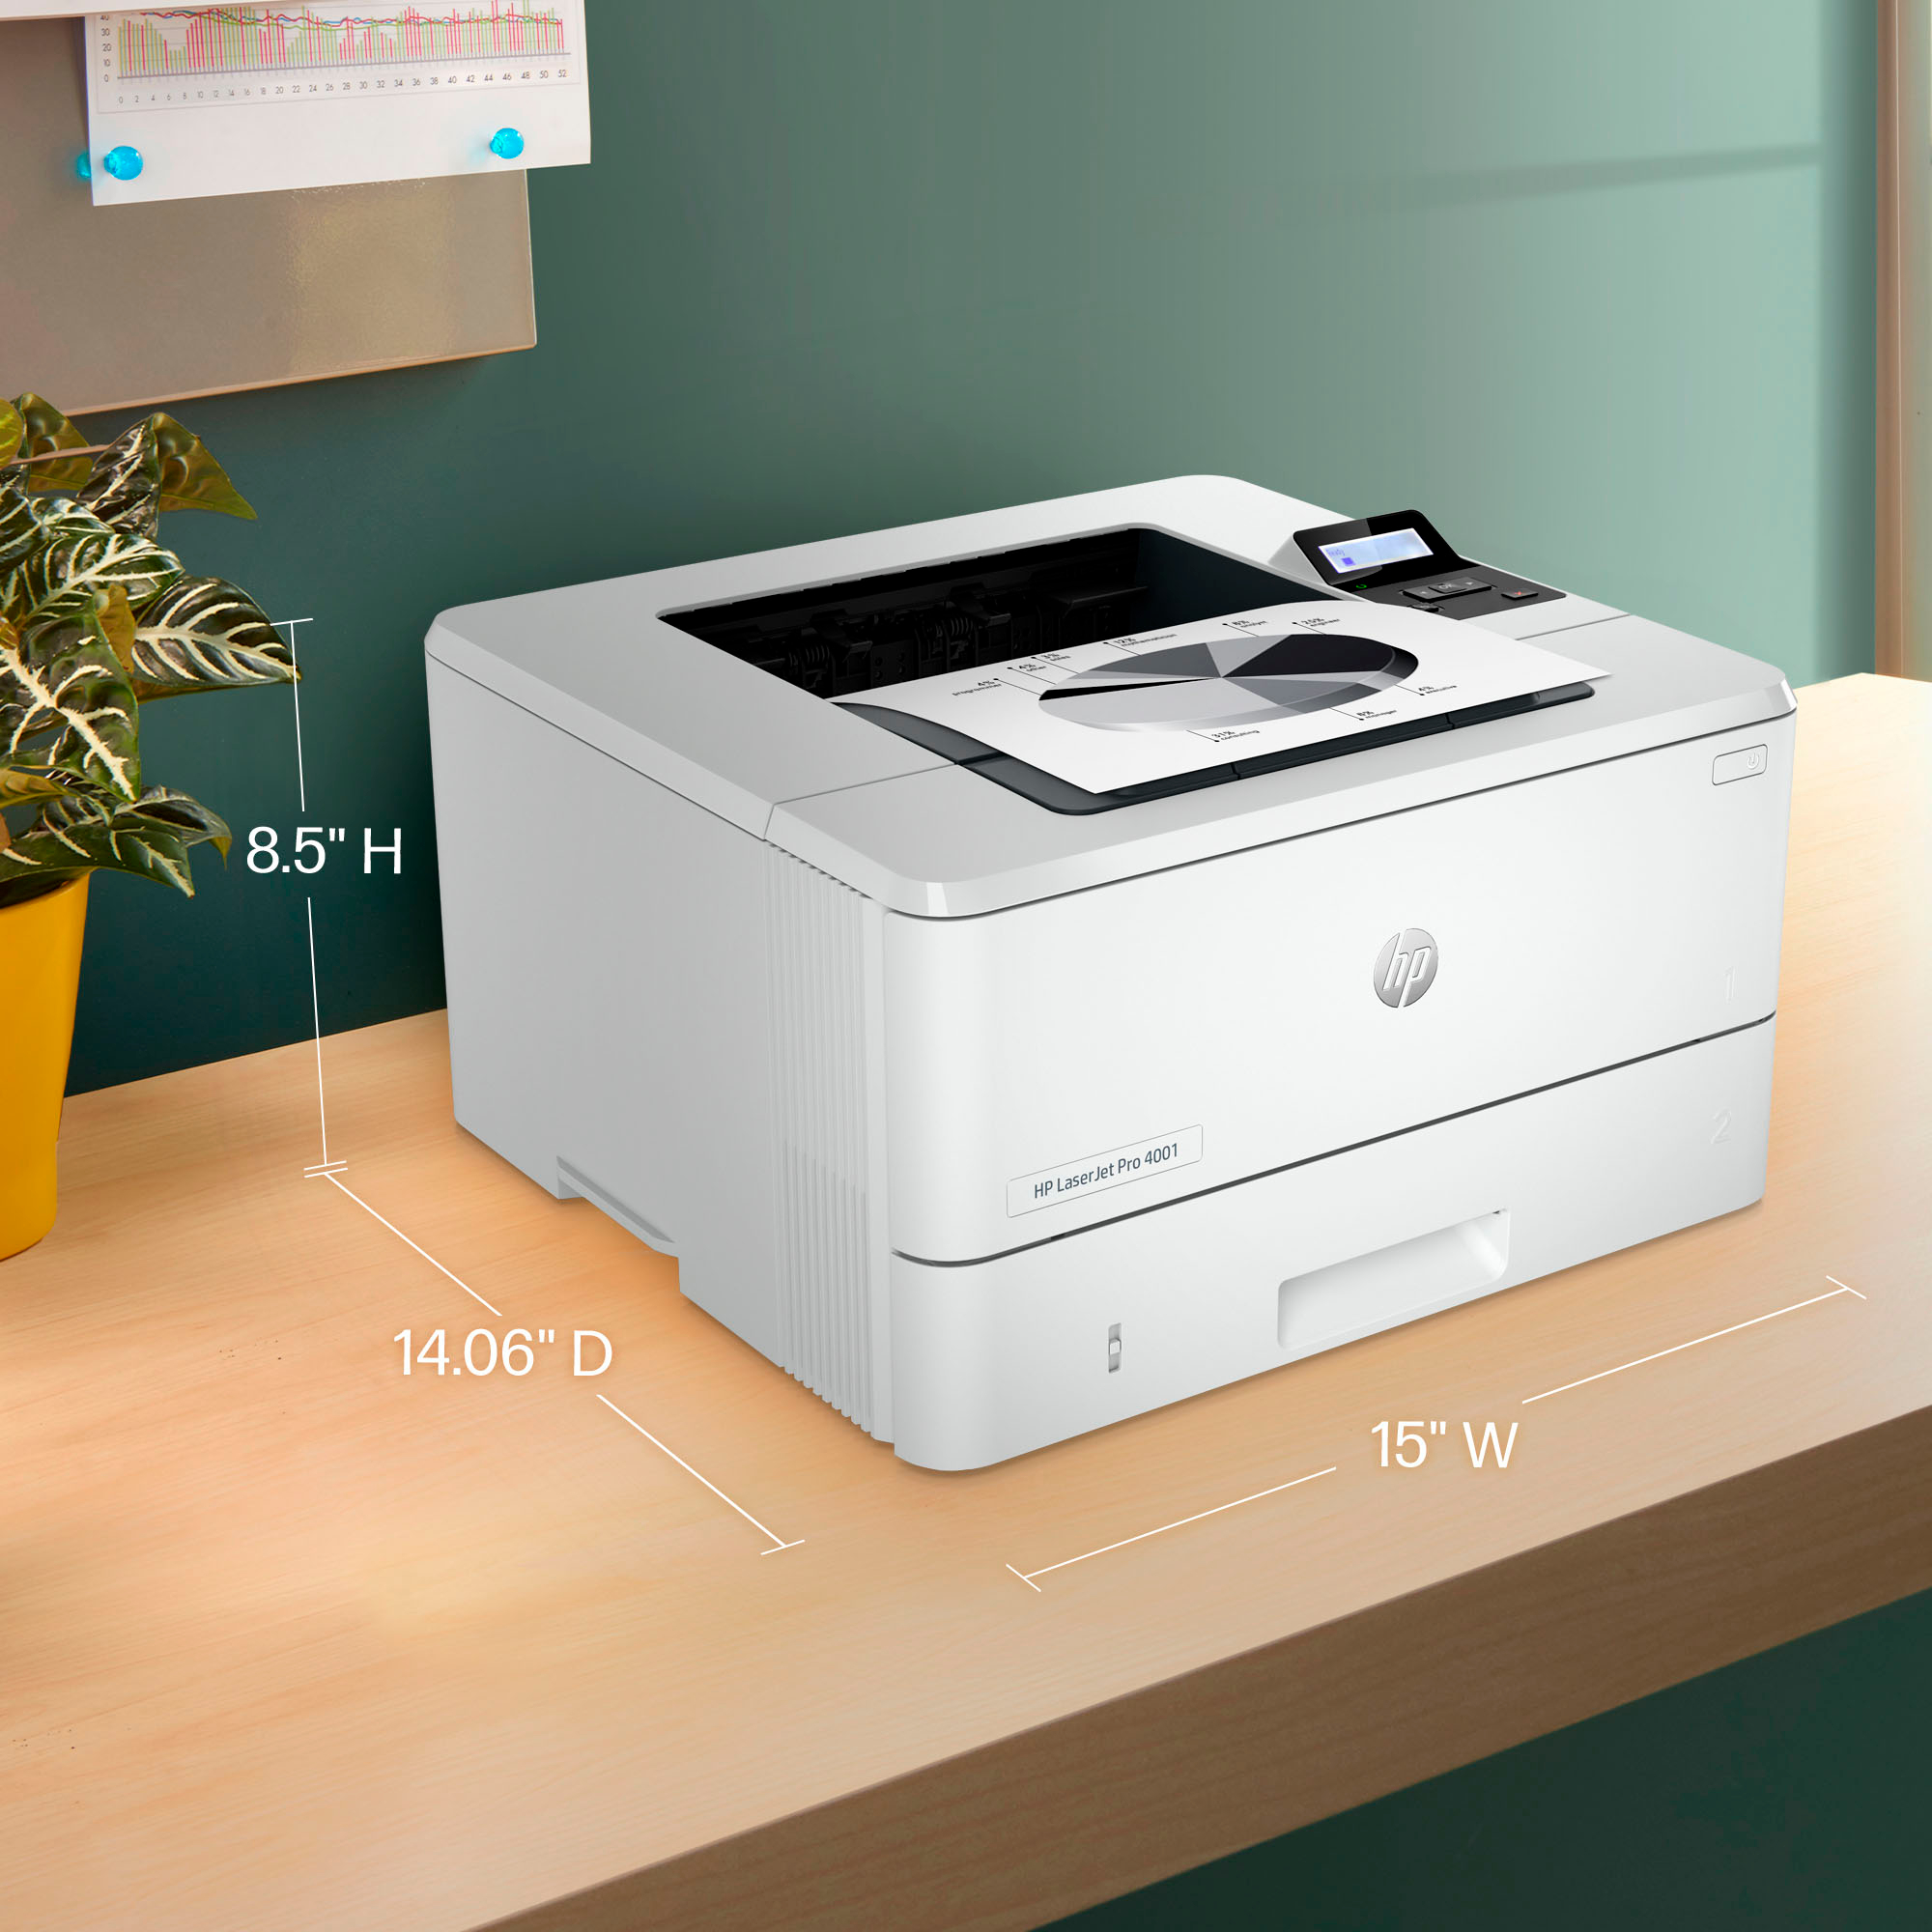 HP LaserJet Pro 4001dn Black & White Printer, Works with Alexa